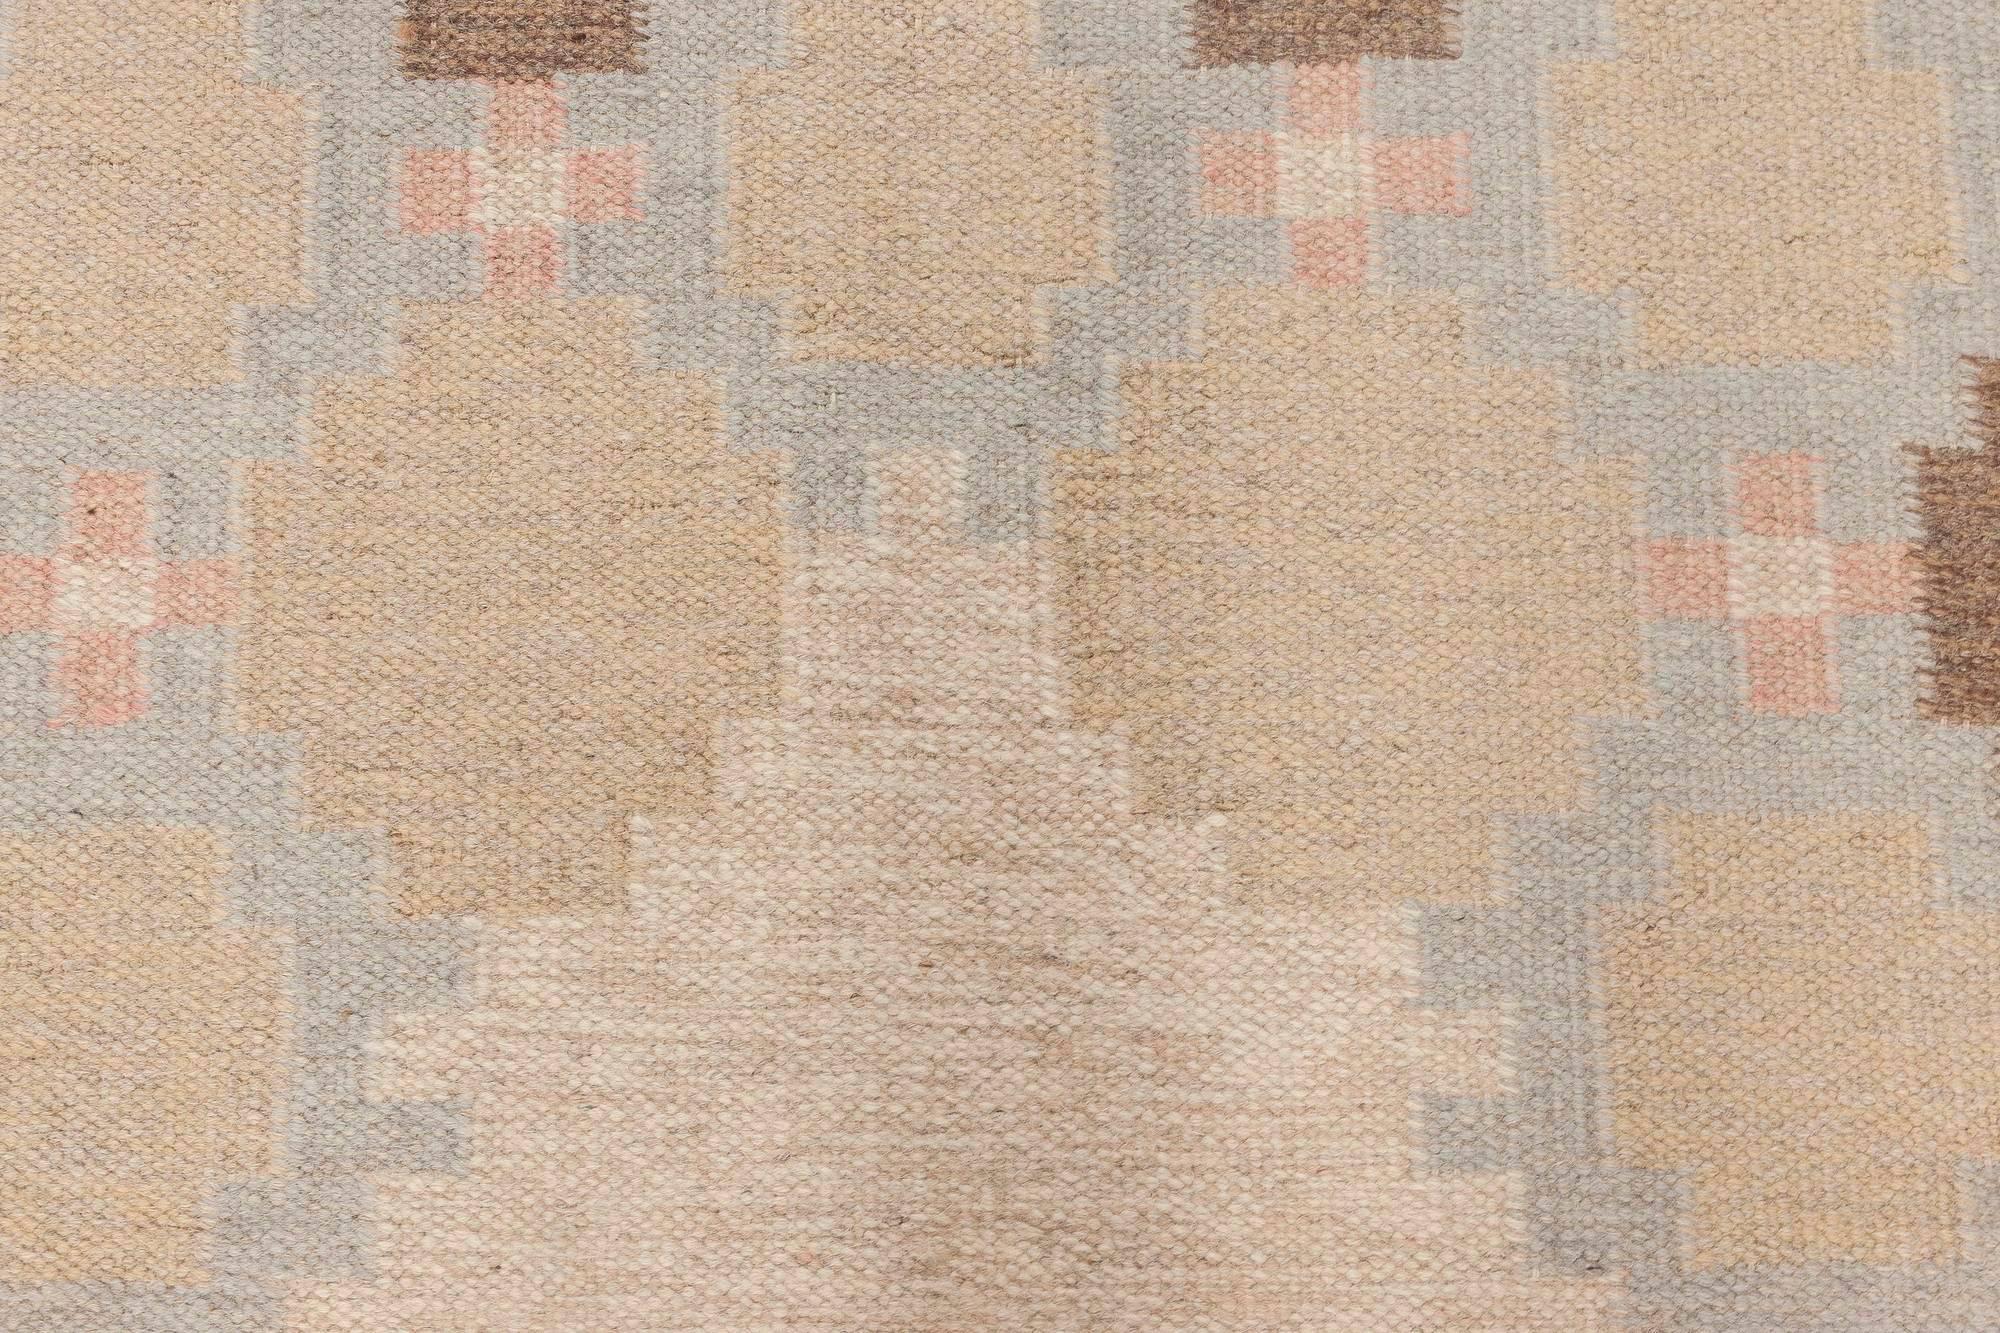 Mid-20th century Swedish beige, brown and blue flat-weave wool rug by Doris Leslie Blau
Size: 5'9